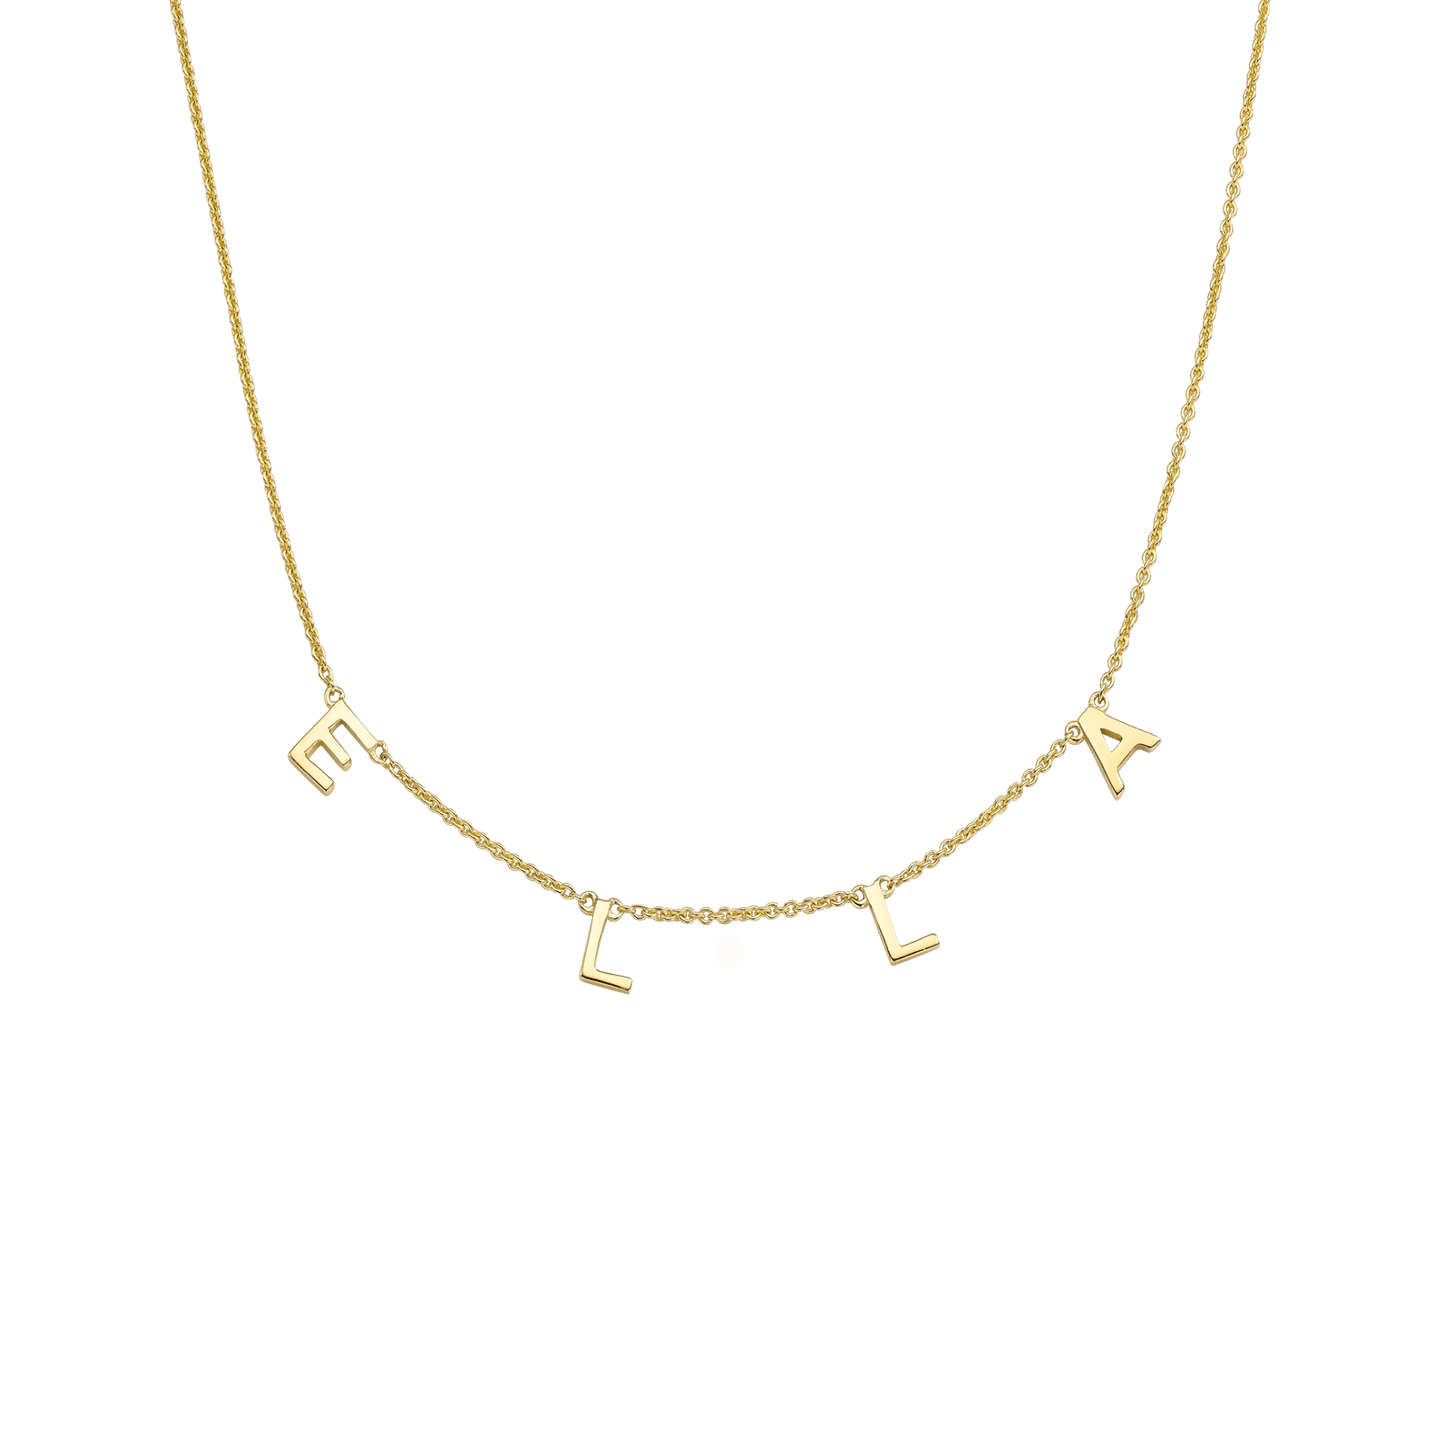 Name Necklace - 18K Gold Vermeil Necklaces magal-dev 1 Initial Adjustable 16-17" (40cm-43cm) 